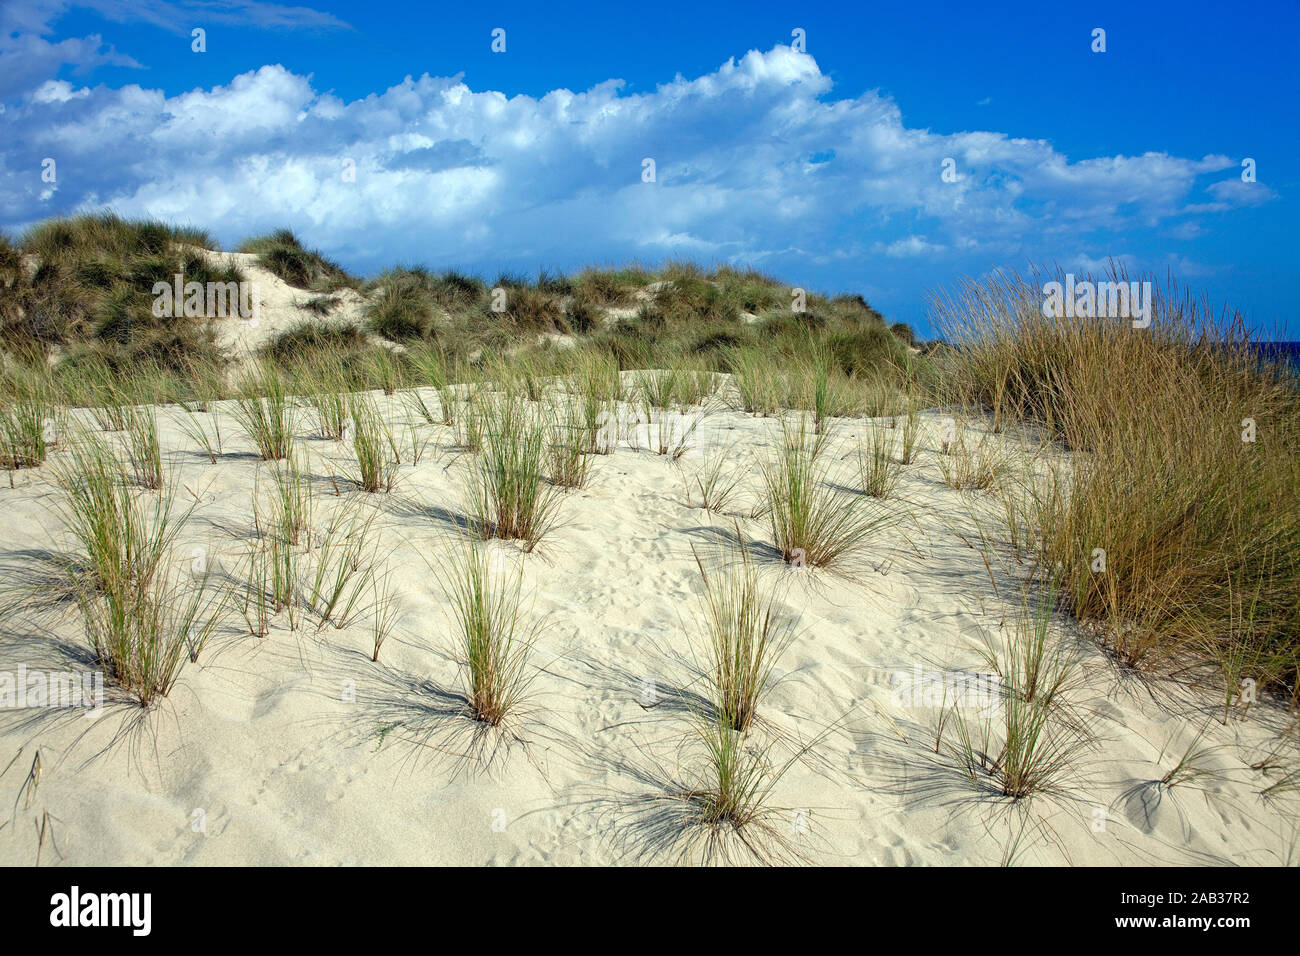 Dune grass at Cala Mesquida, idyllic bay with dunes at Cala Ratjada, Mallorca, Balearic islands, Spain Stock Photo